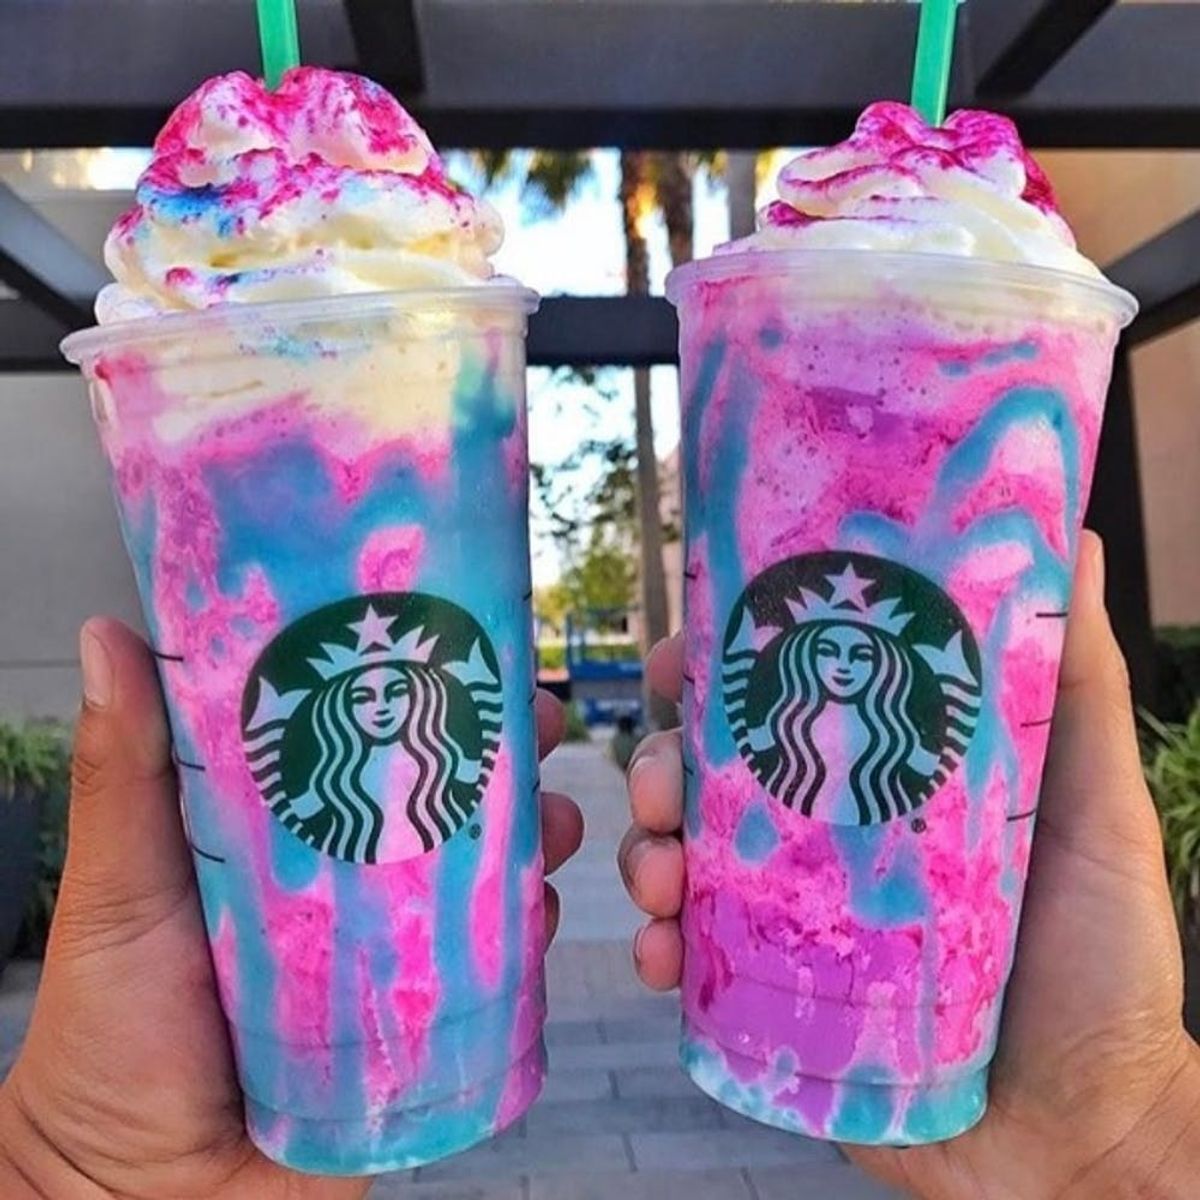 Starbucks Has BIG Plans to Follow Up the Unicorn Frappuccino